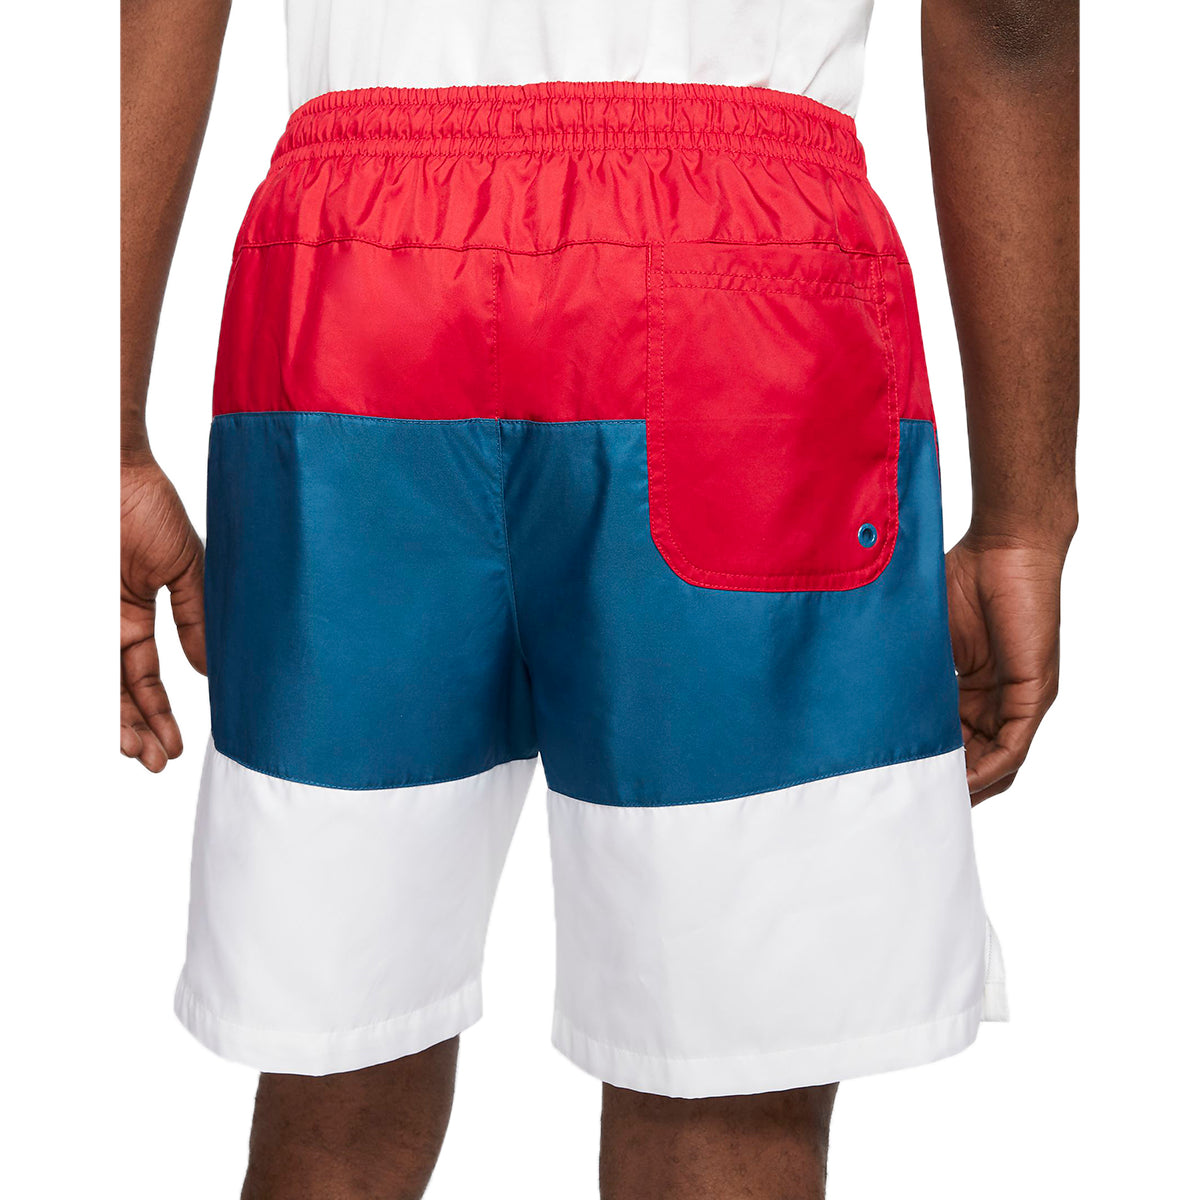 Nike Sportswear City Edition Woven Shorts Mens Style : Cj4486